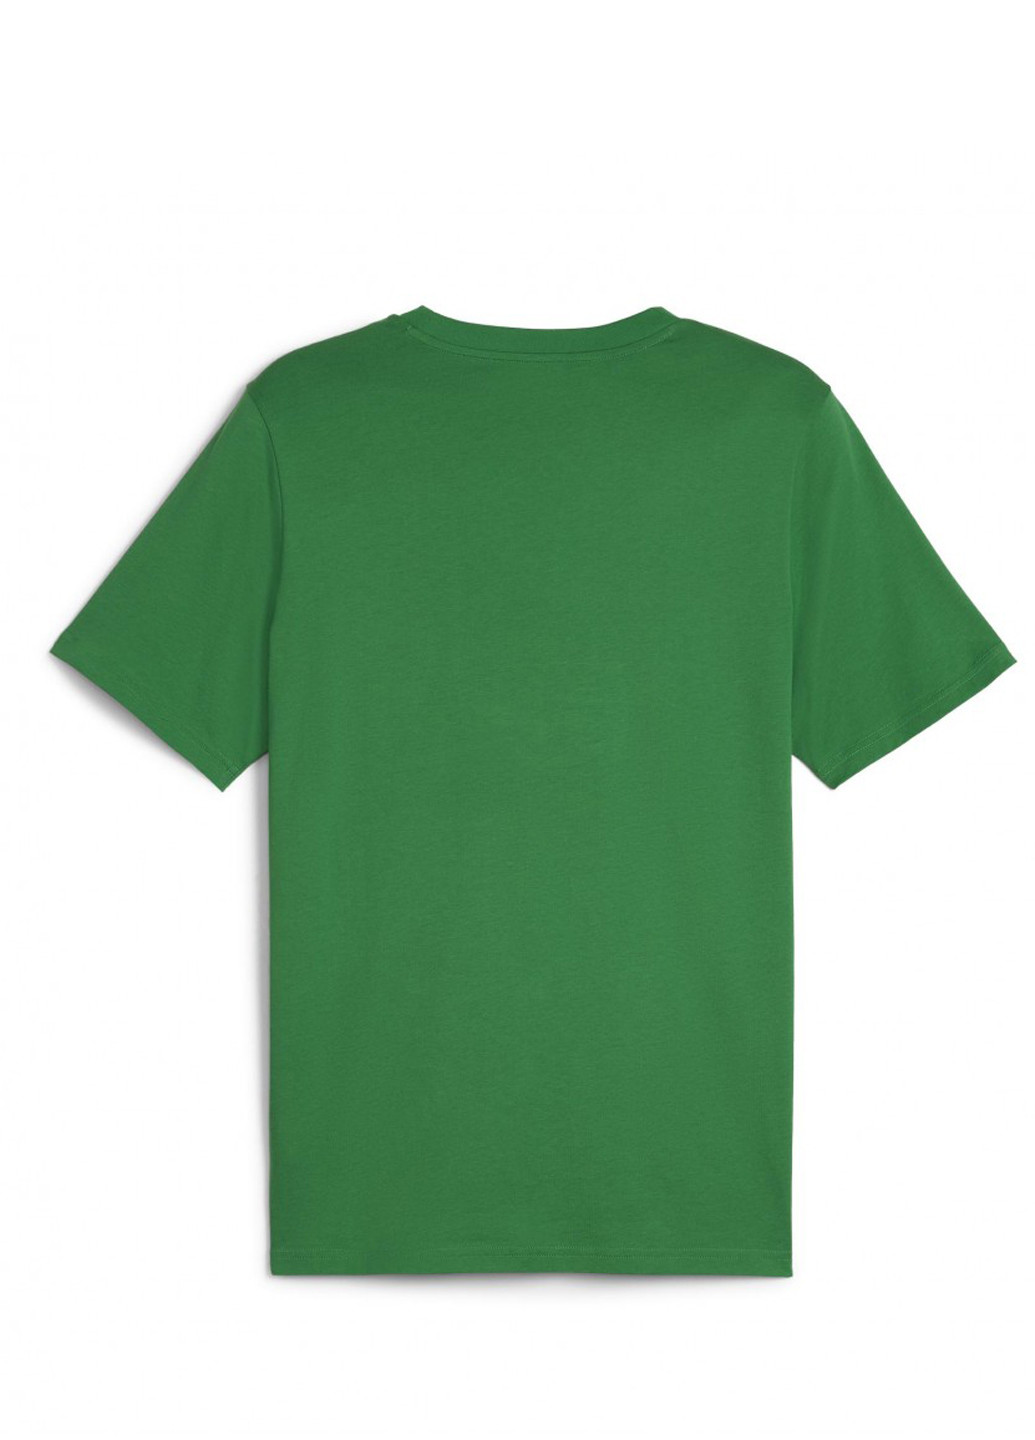 Зеленая футболка Puma GRAPHICS Sneaker Box Tee